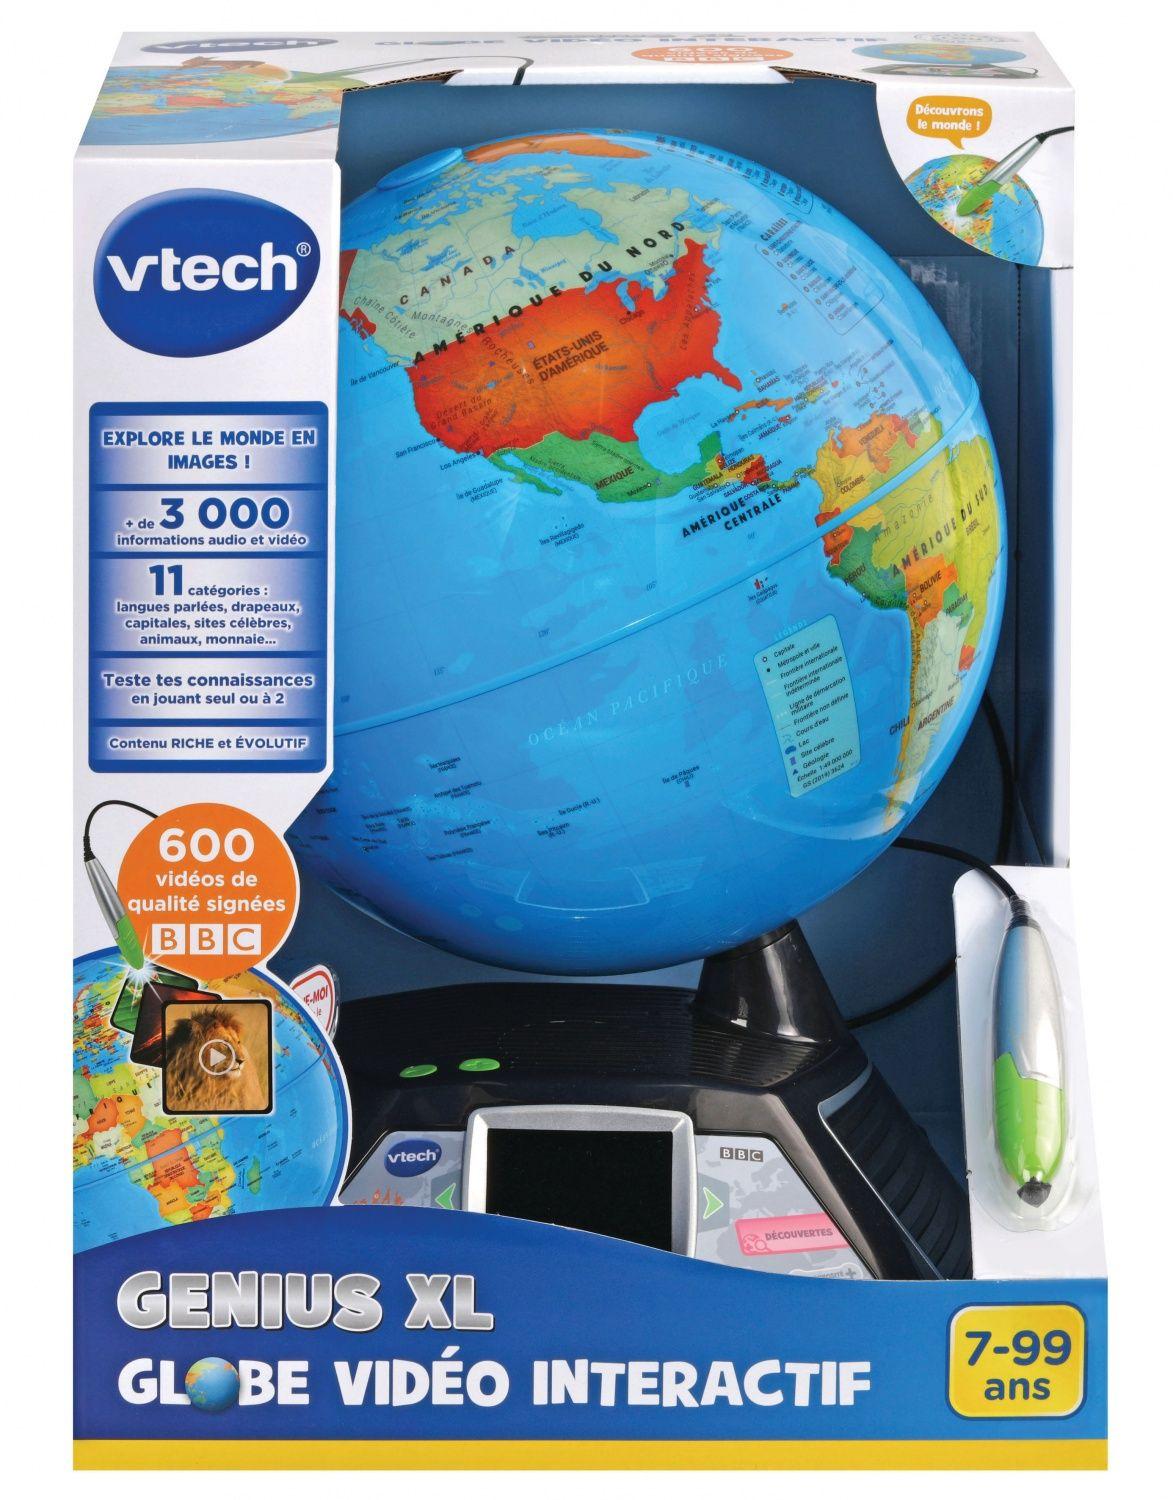 Promo Genius XL-globe vidéo interactif chez Auchan